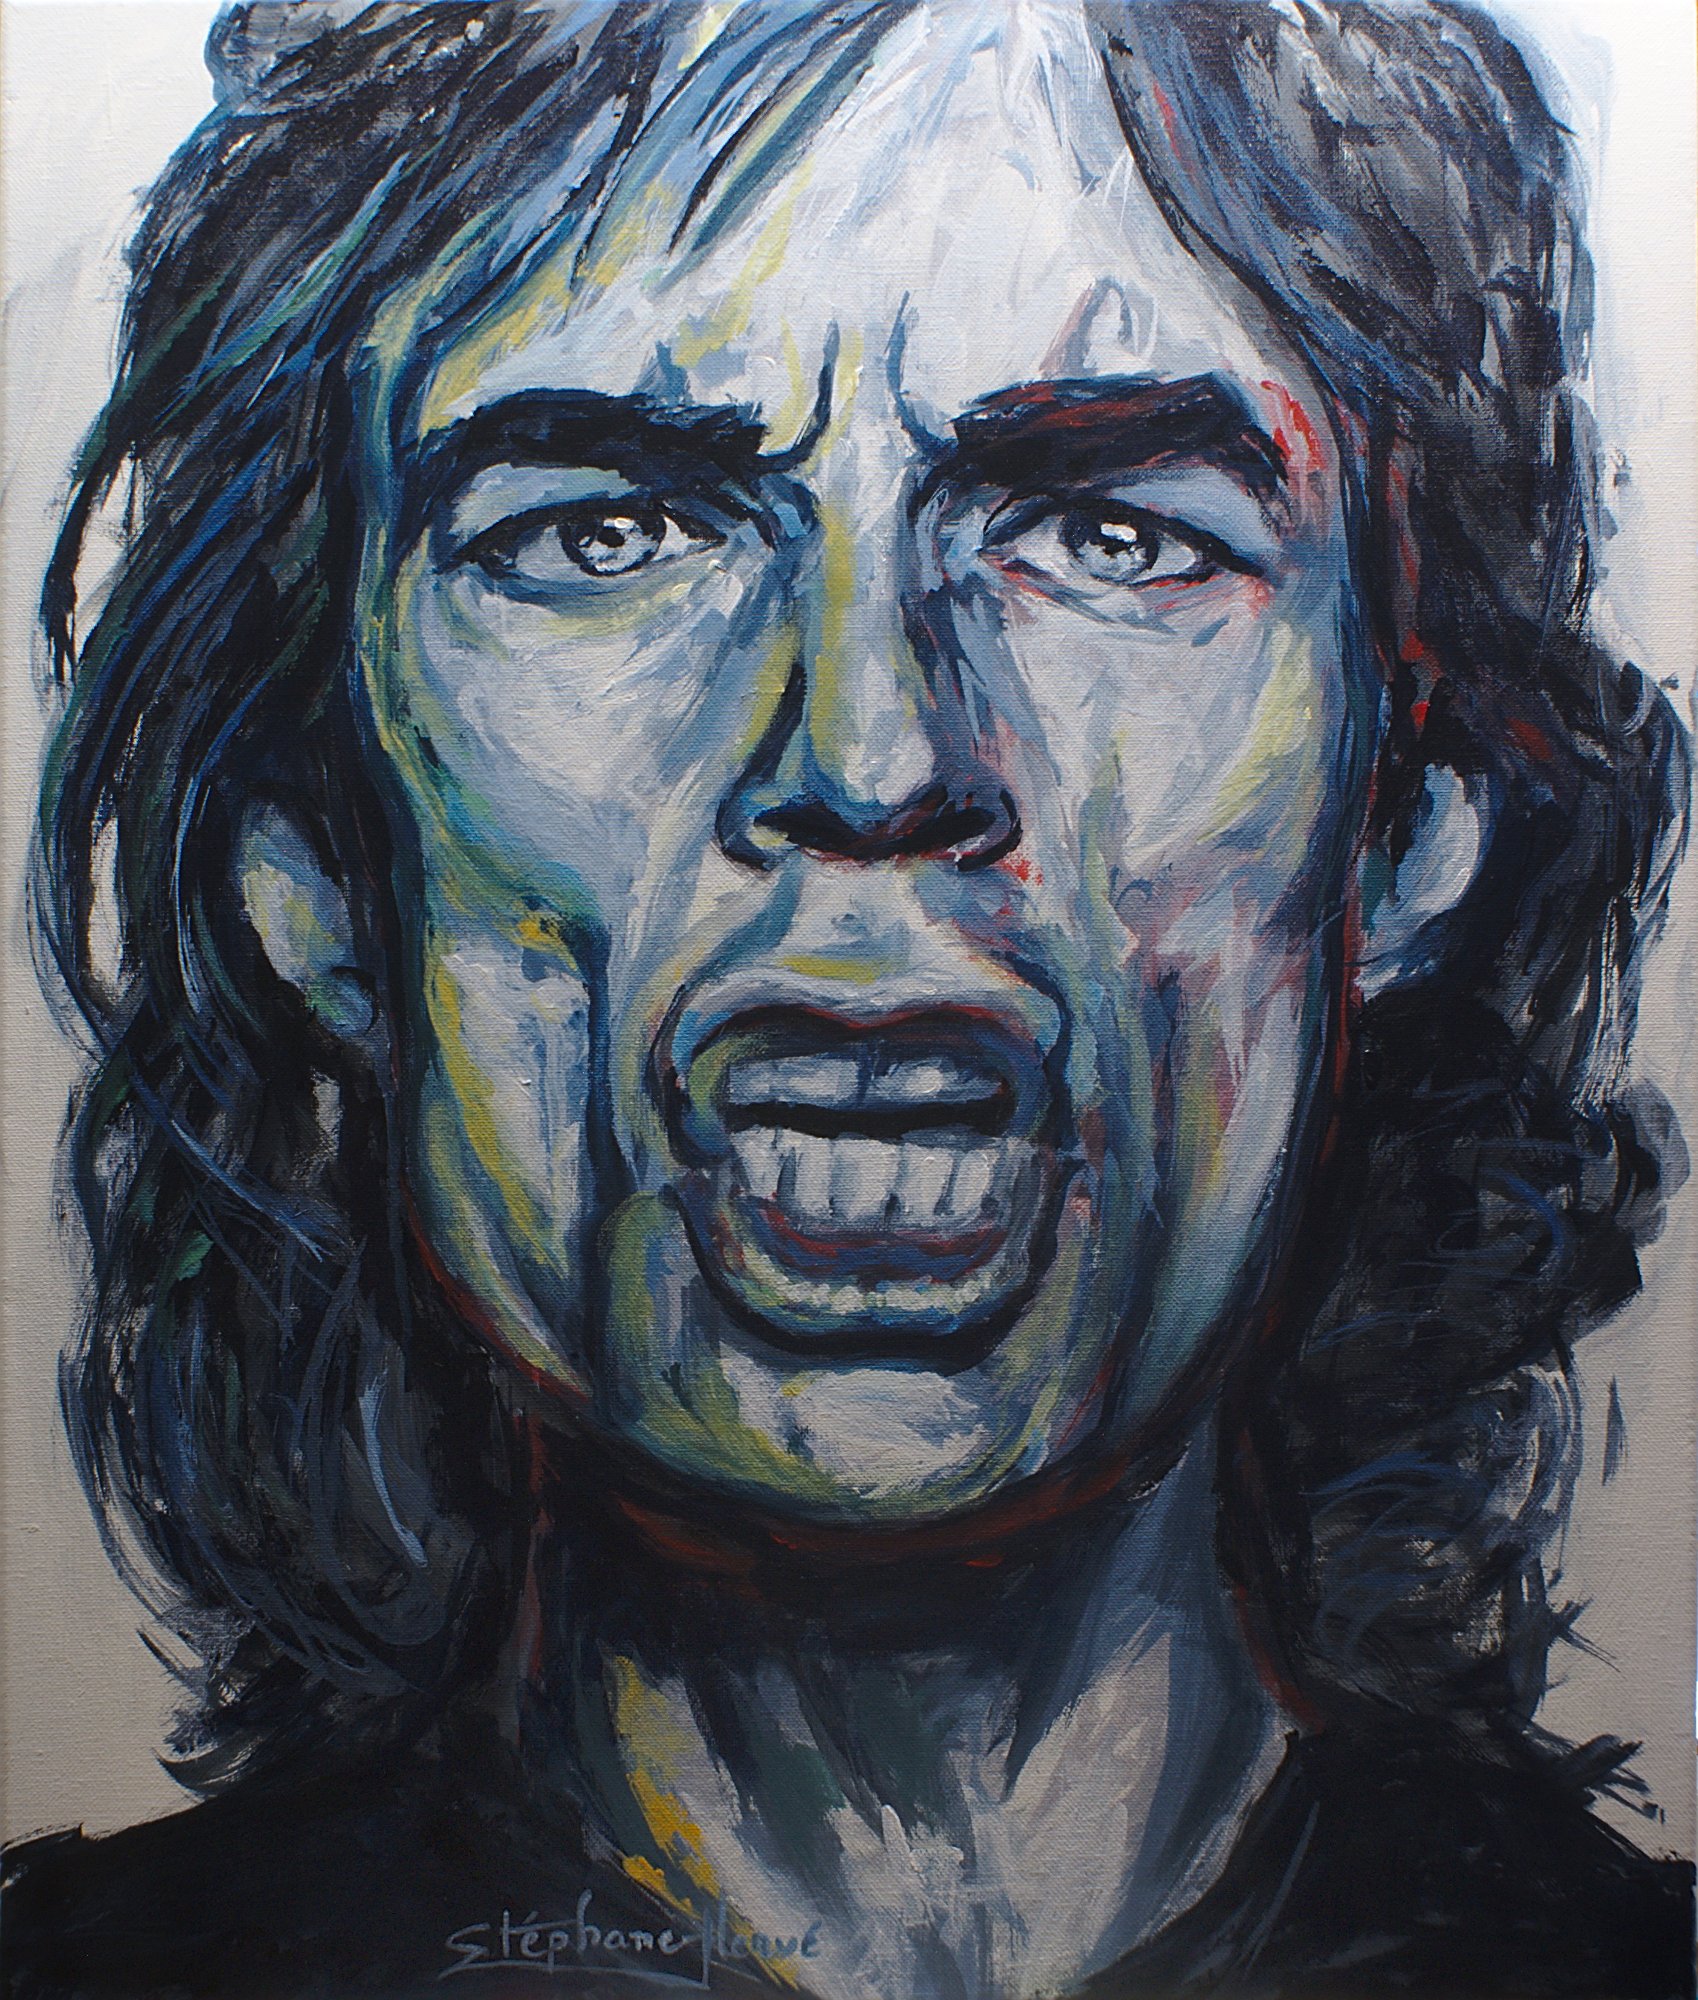 Image agrandie de Mick Jagger